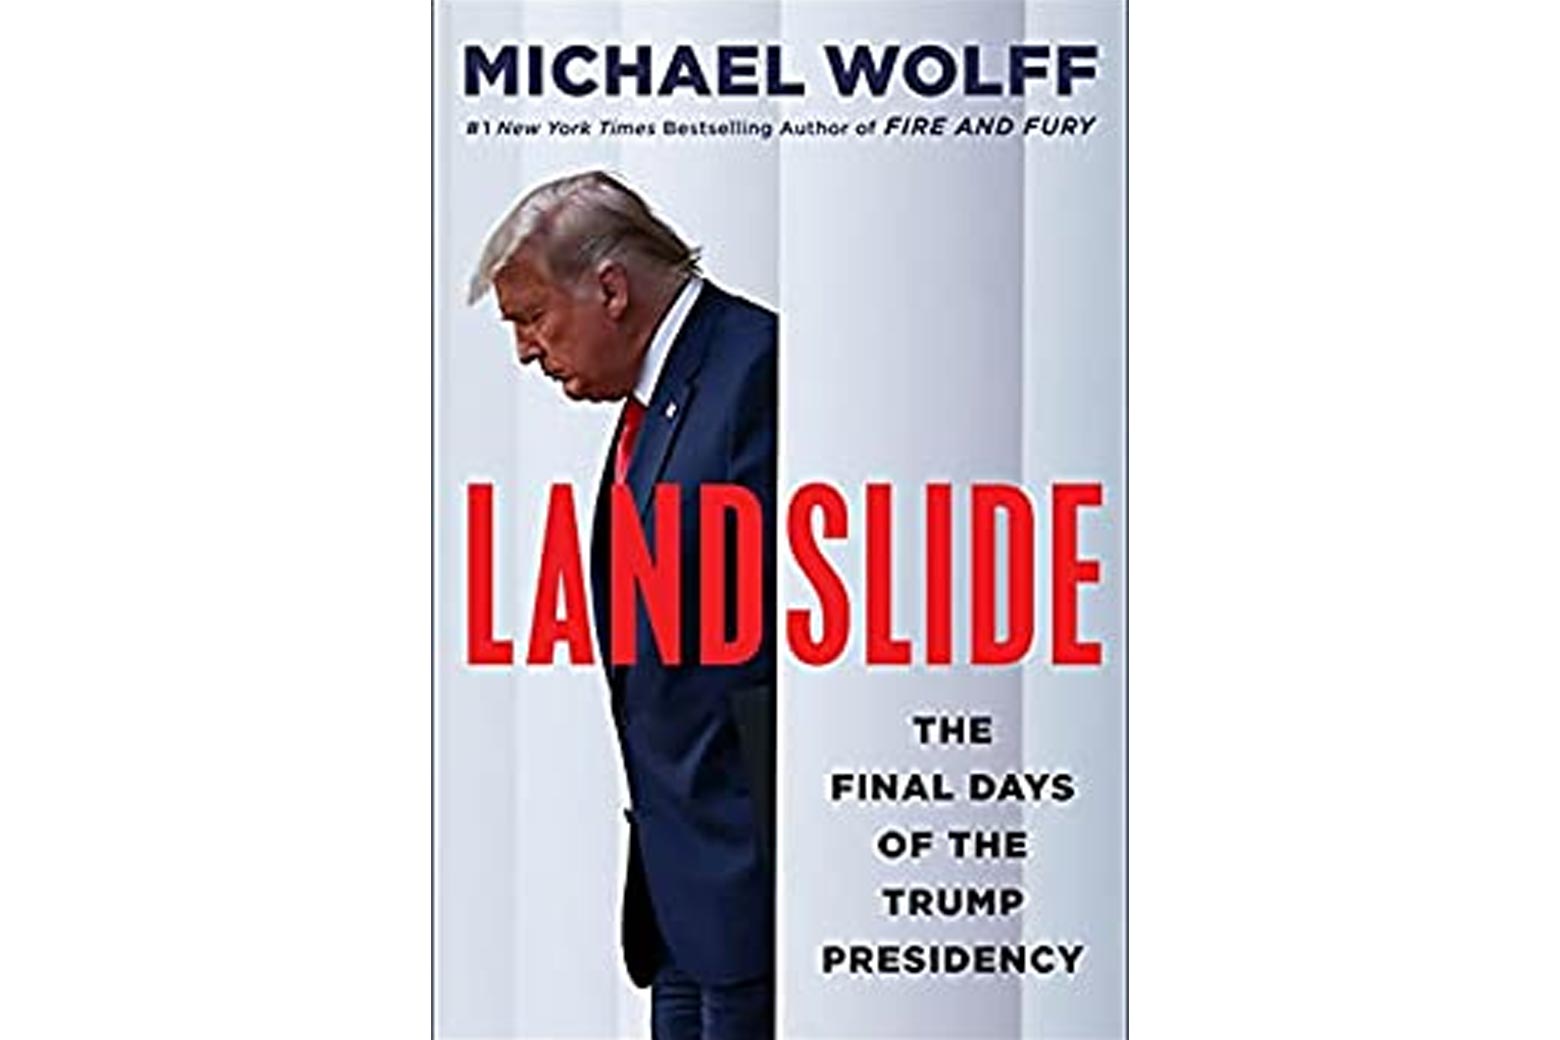 The cover of Landslide.